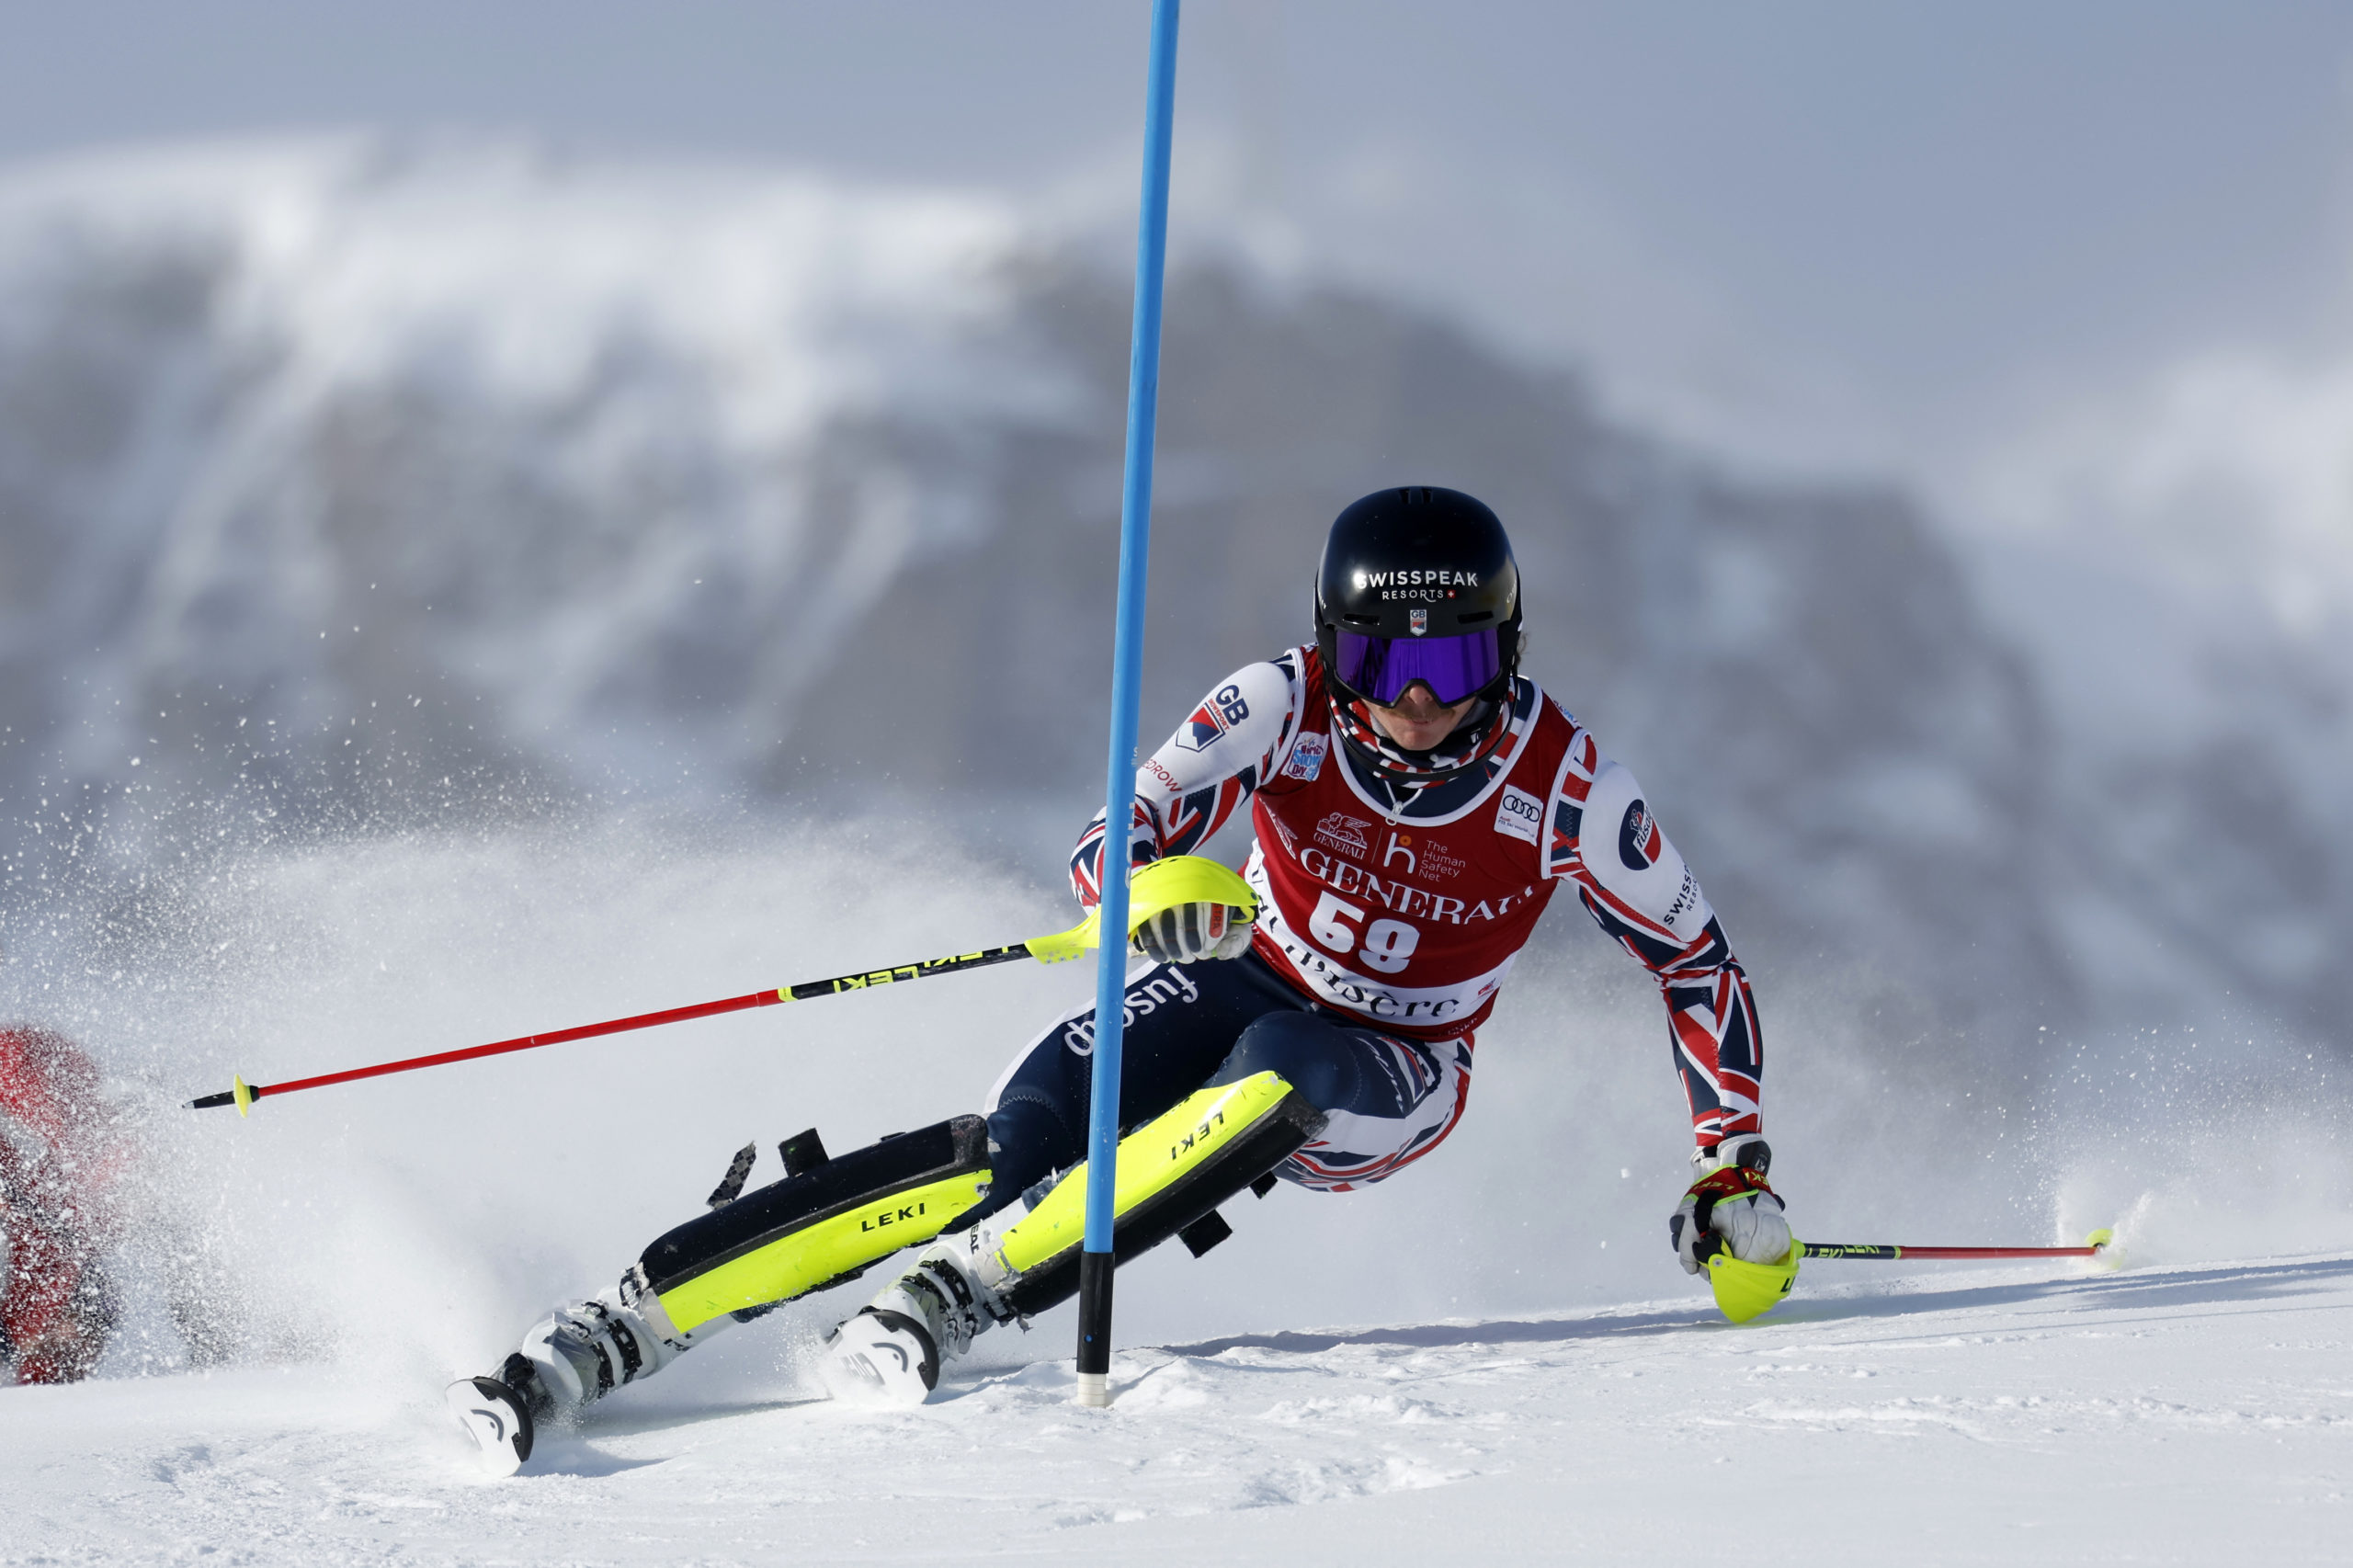 12-athlete squad marks biggest British Alpine World Championships team of recent years